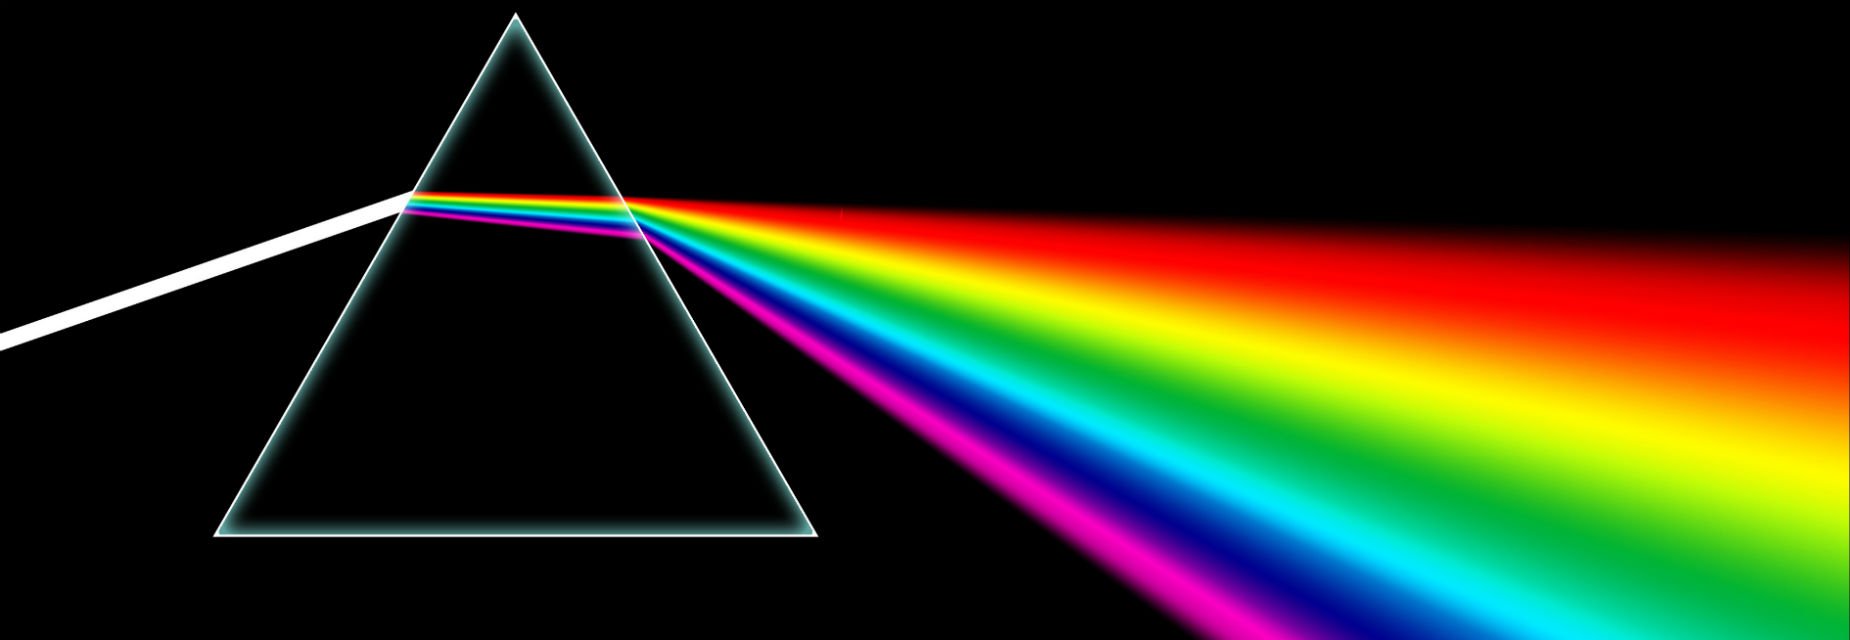 Prism image inspired by album artwork